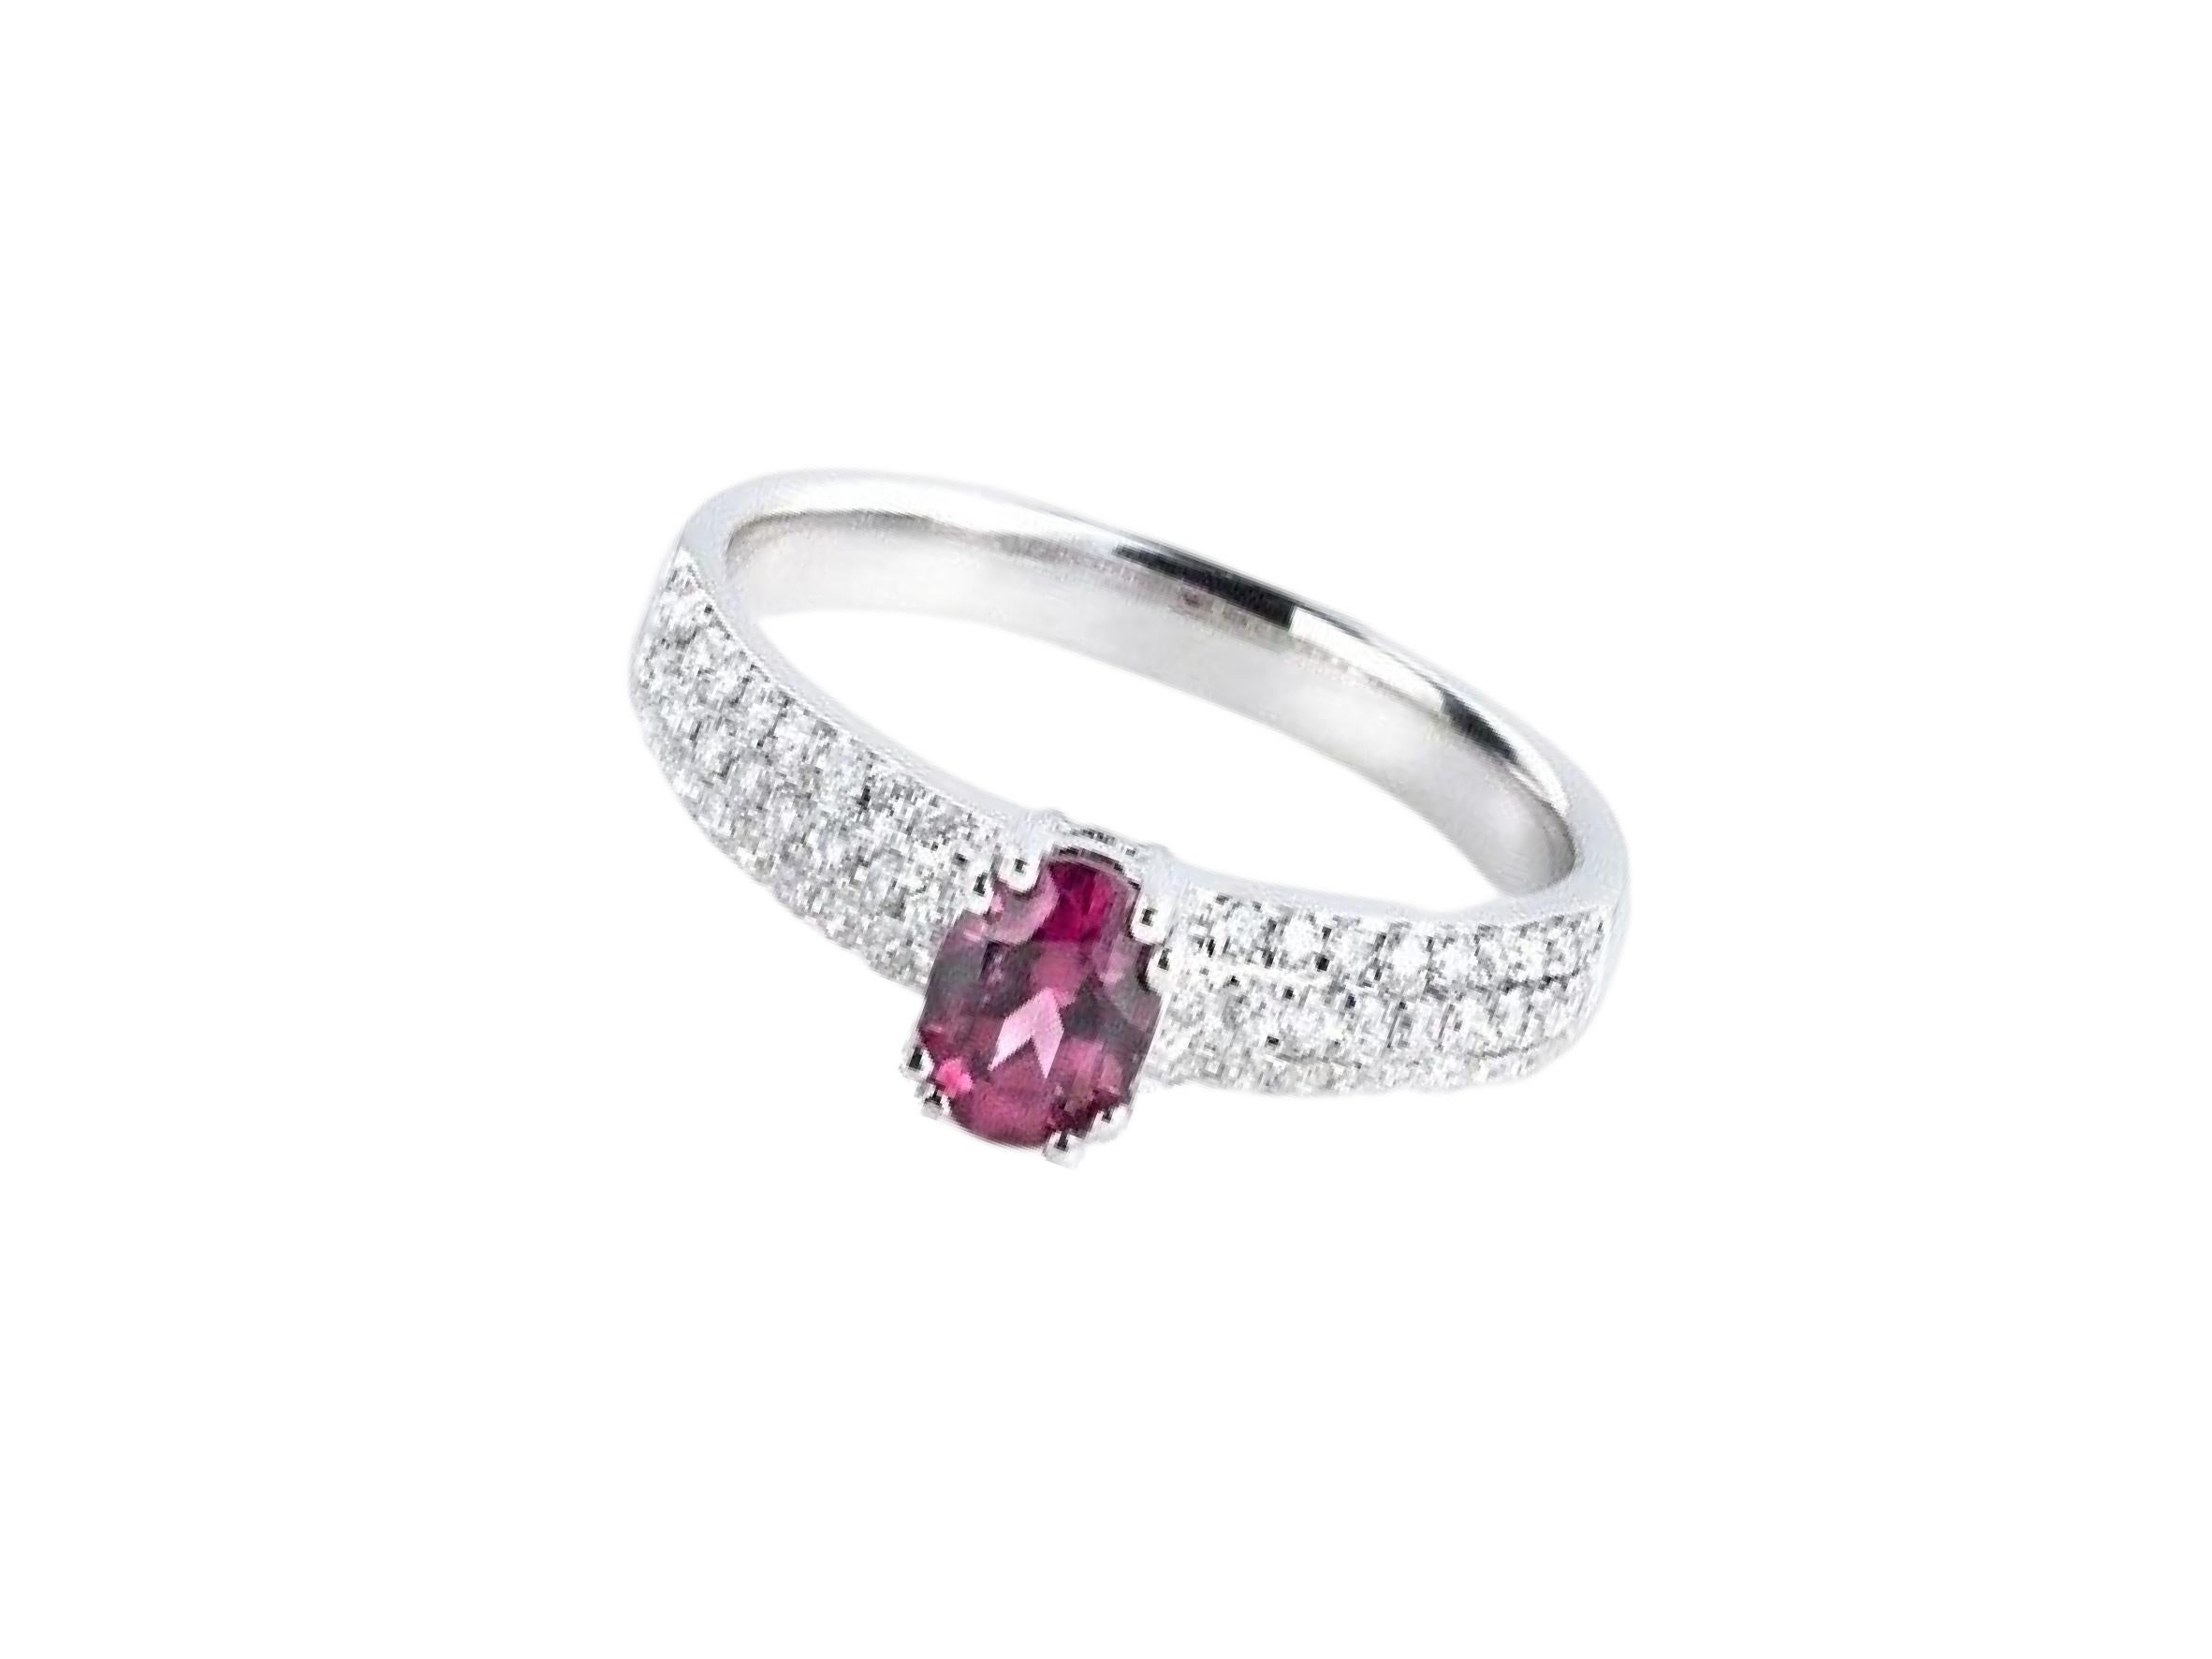 For Sale:  0.337 Carat Pink Tourmaline and Diamond Ring in 14 Karat White Gold 4